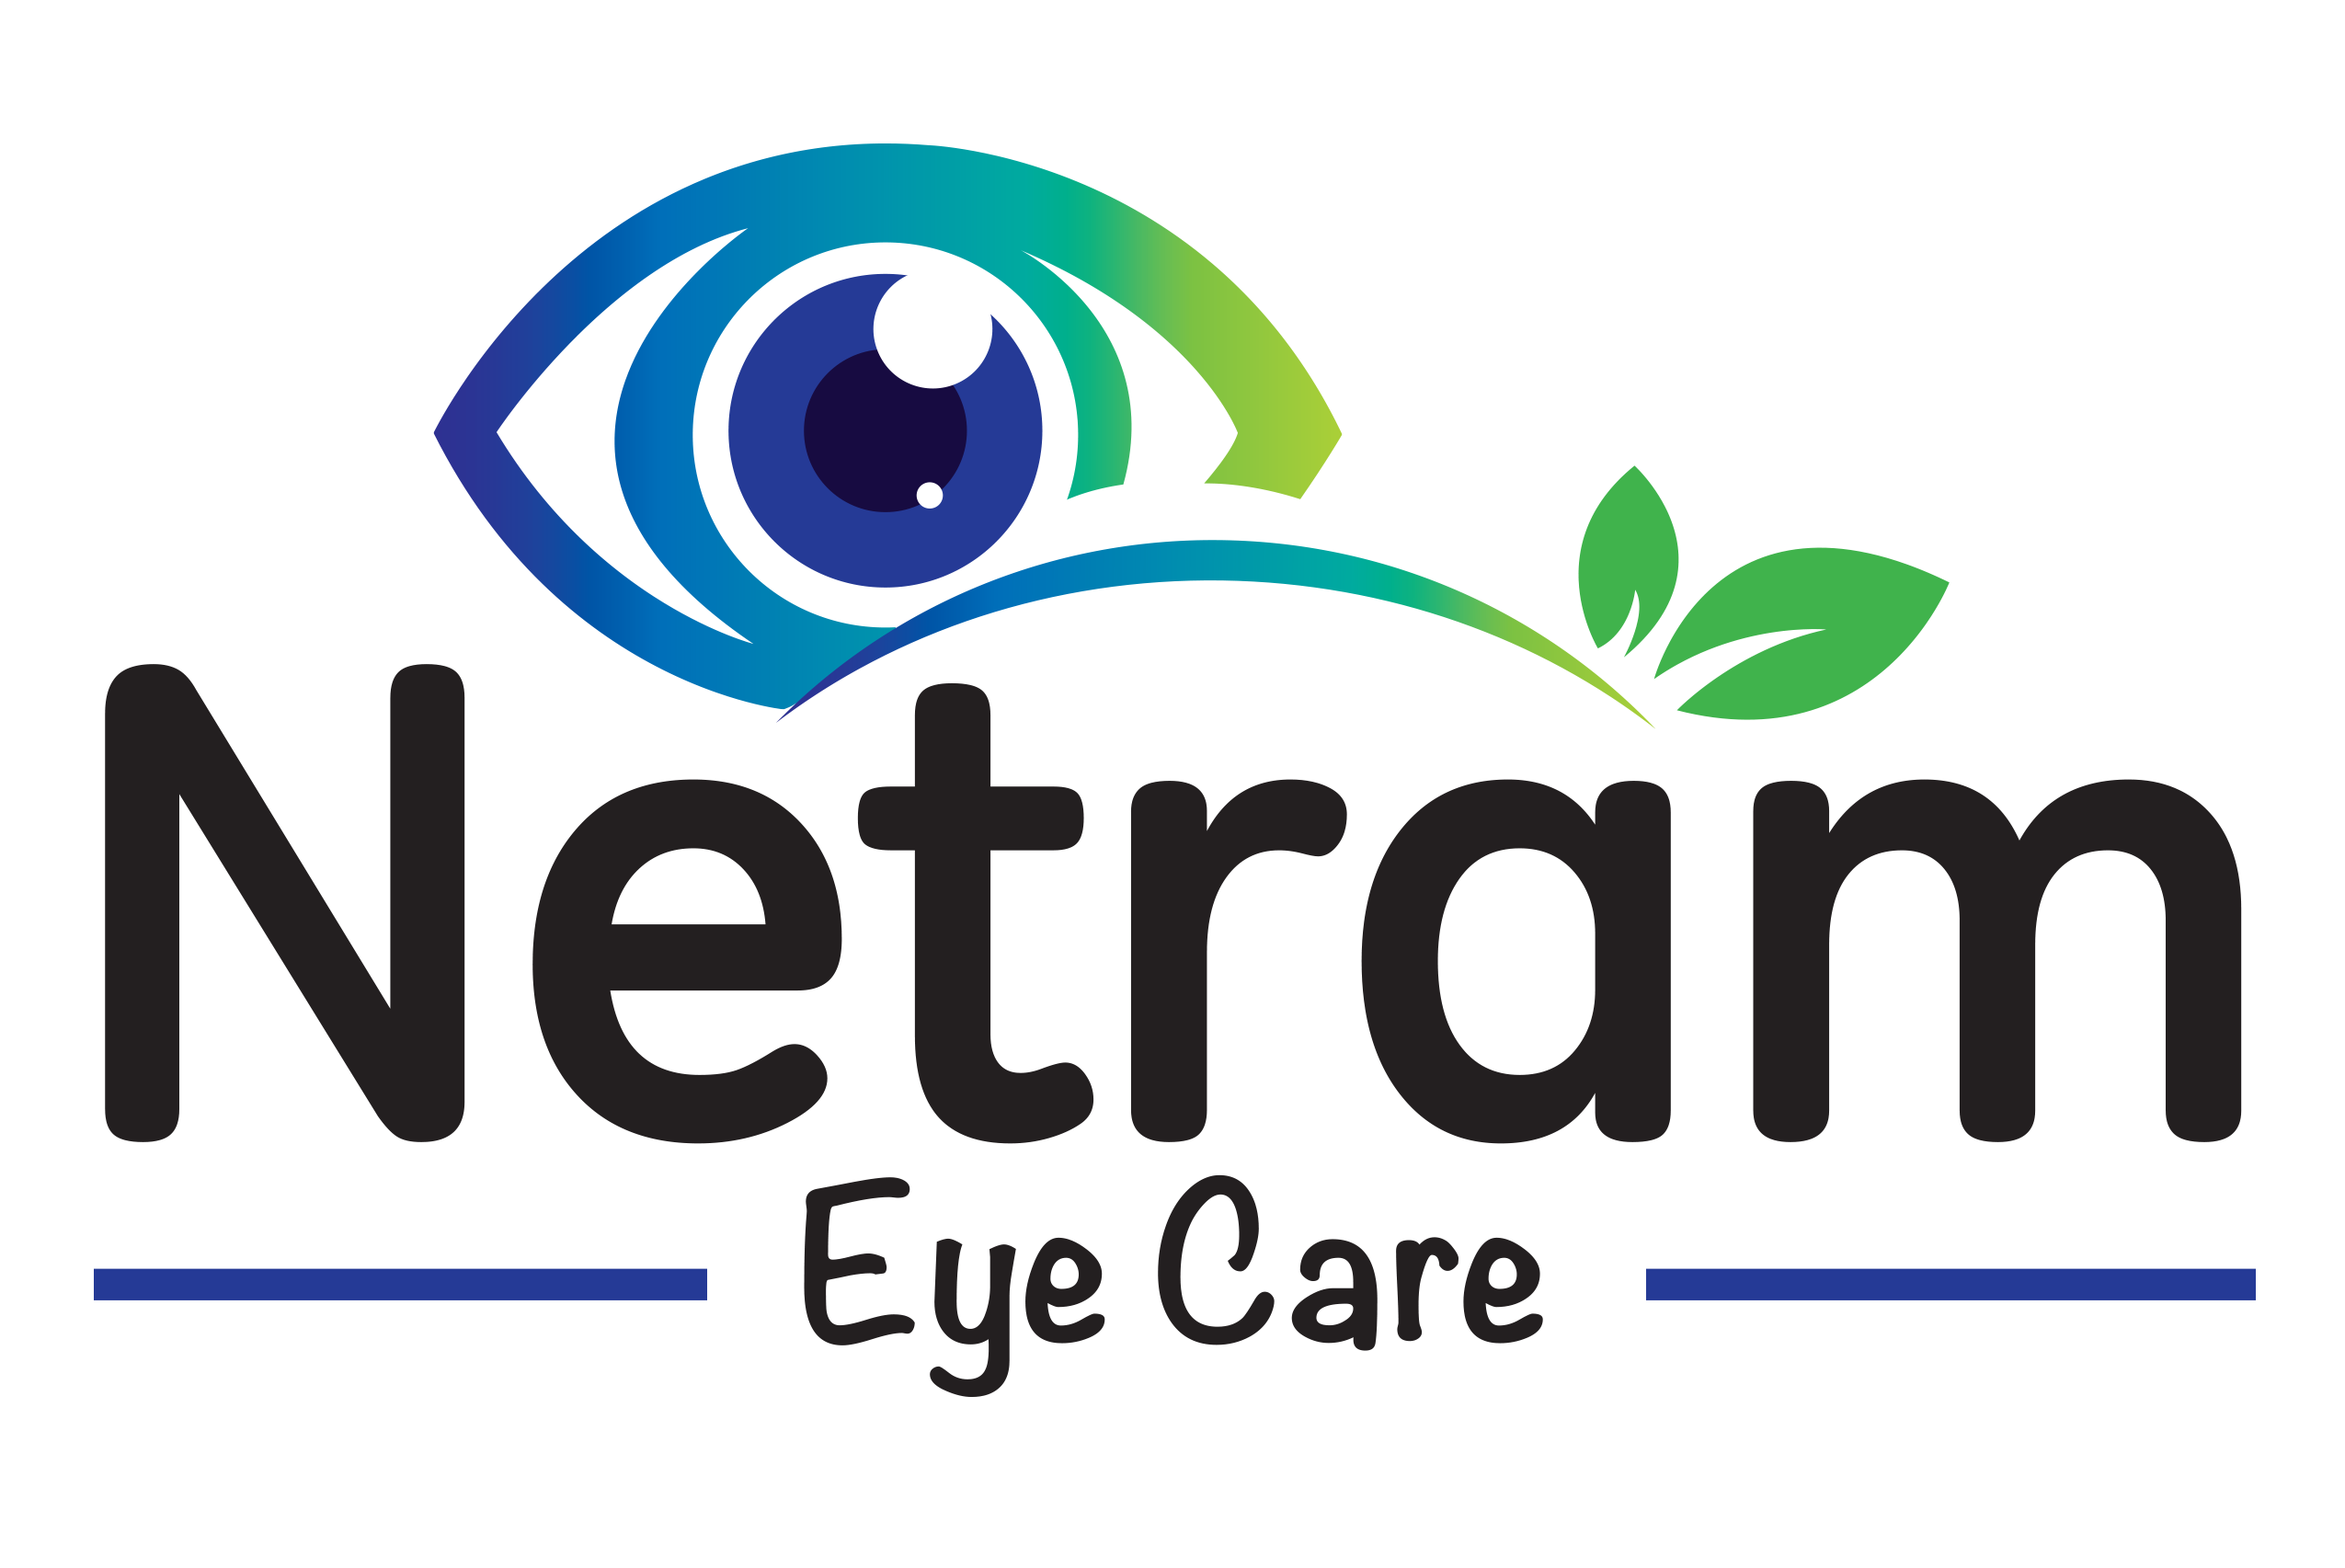 Netram Eye Care